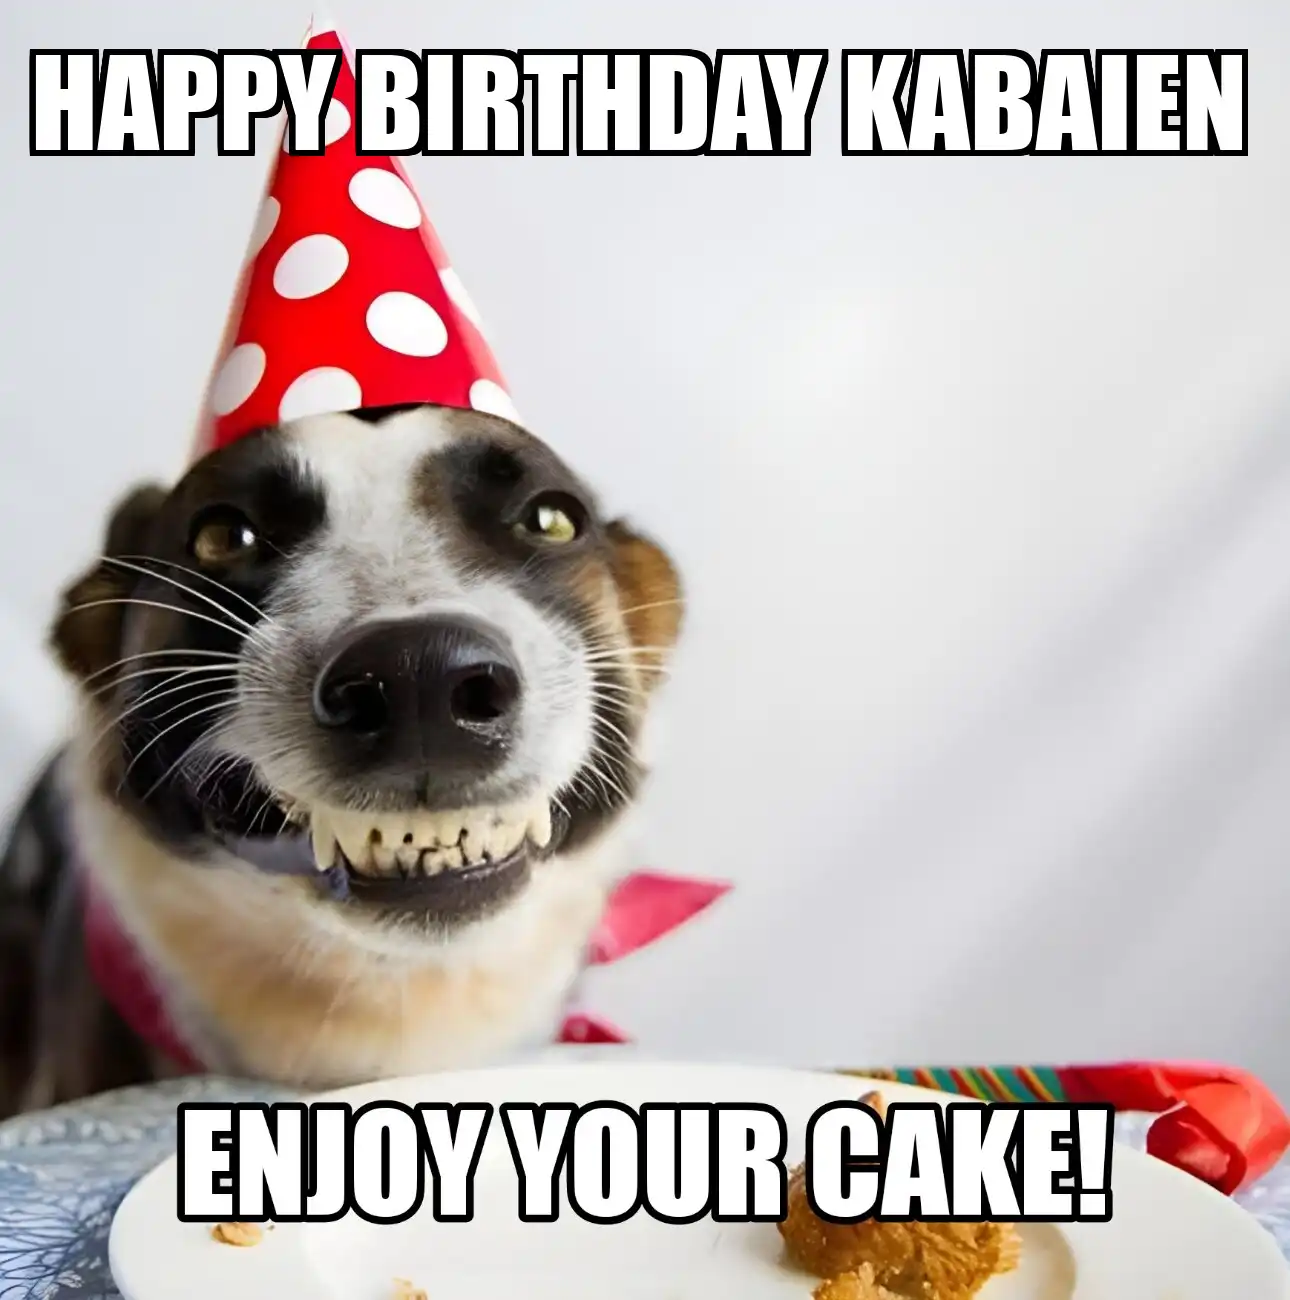 Happy Birthday Kabaien Enjoy Your Cake Dog Meme